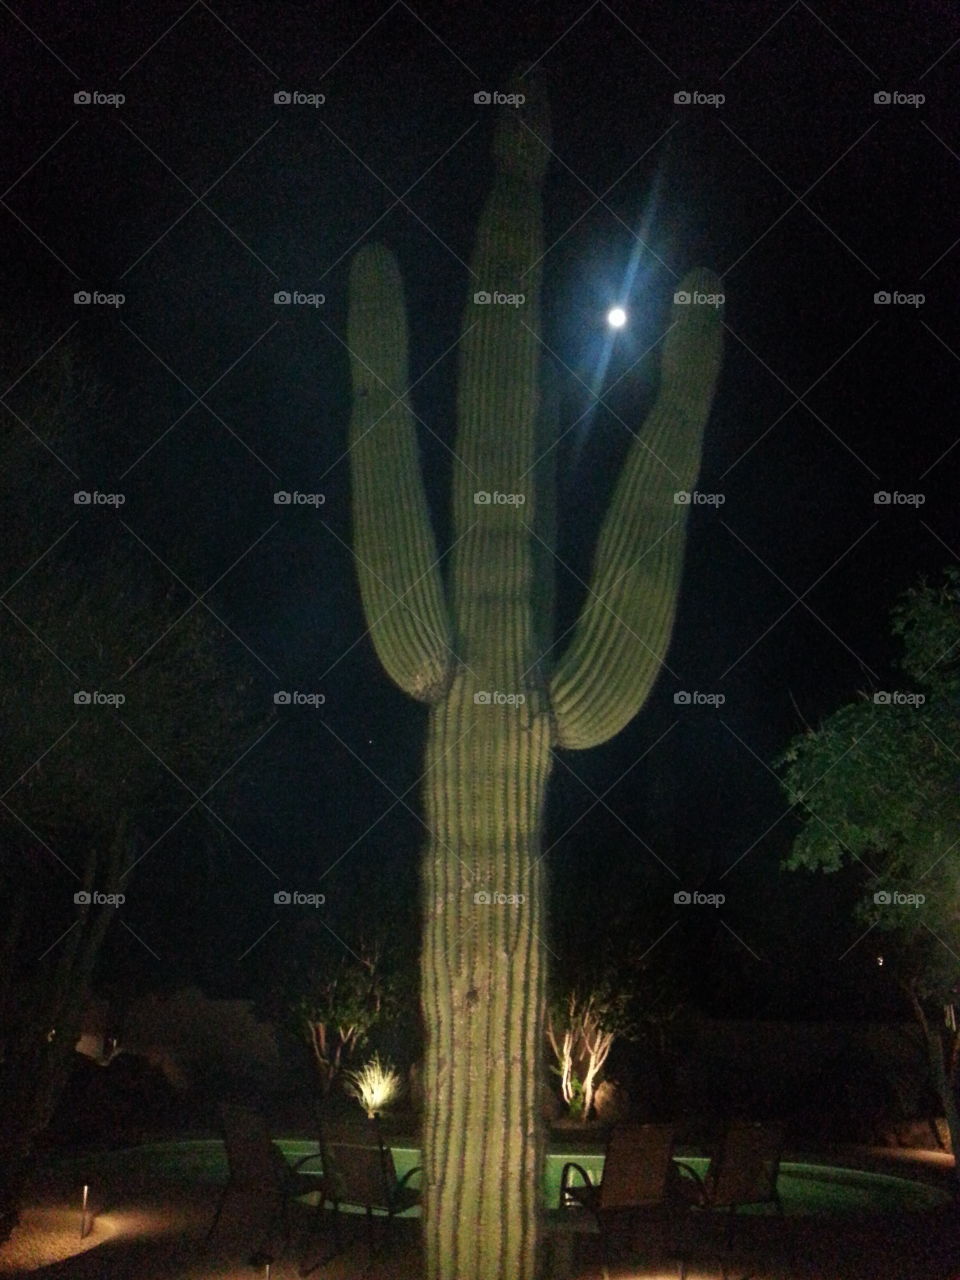 Saguaro cactus and the moon.